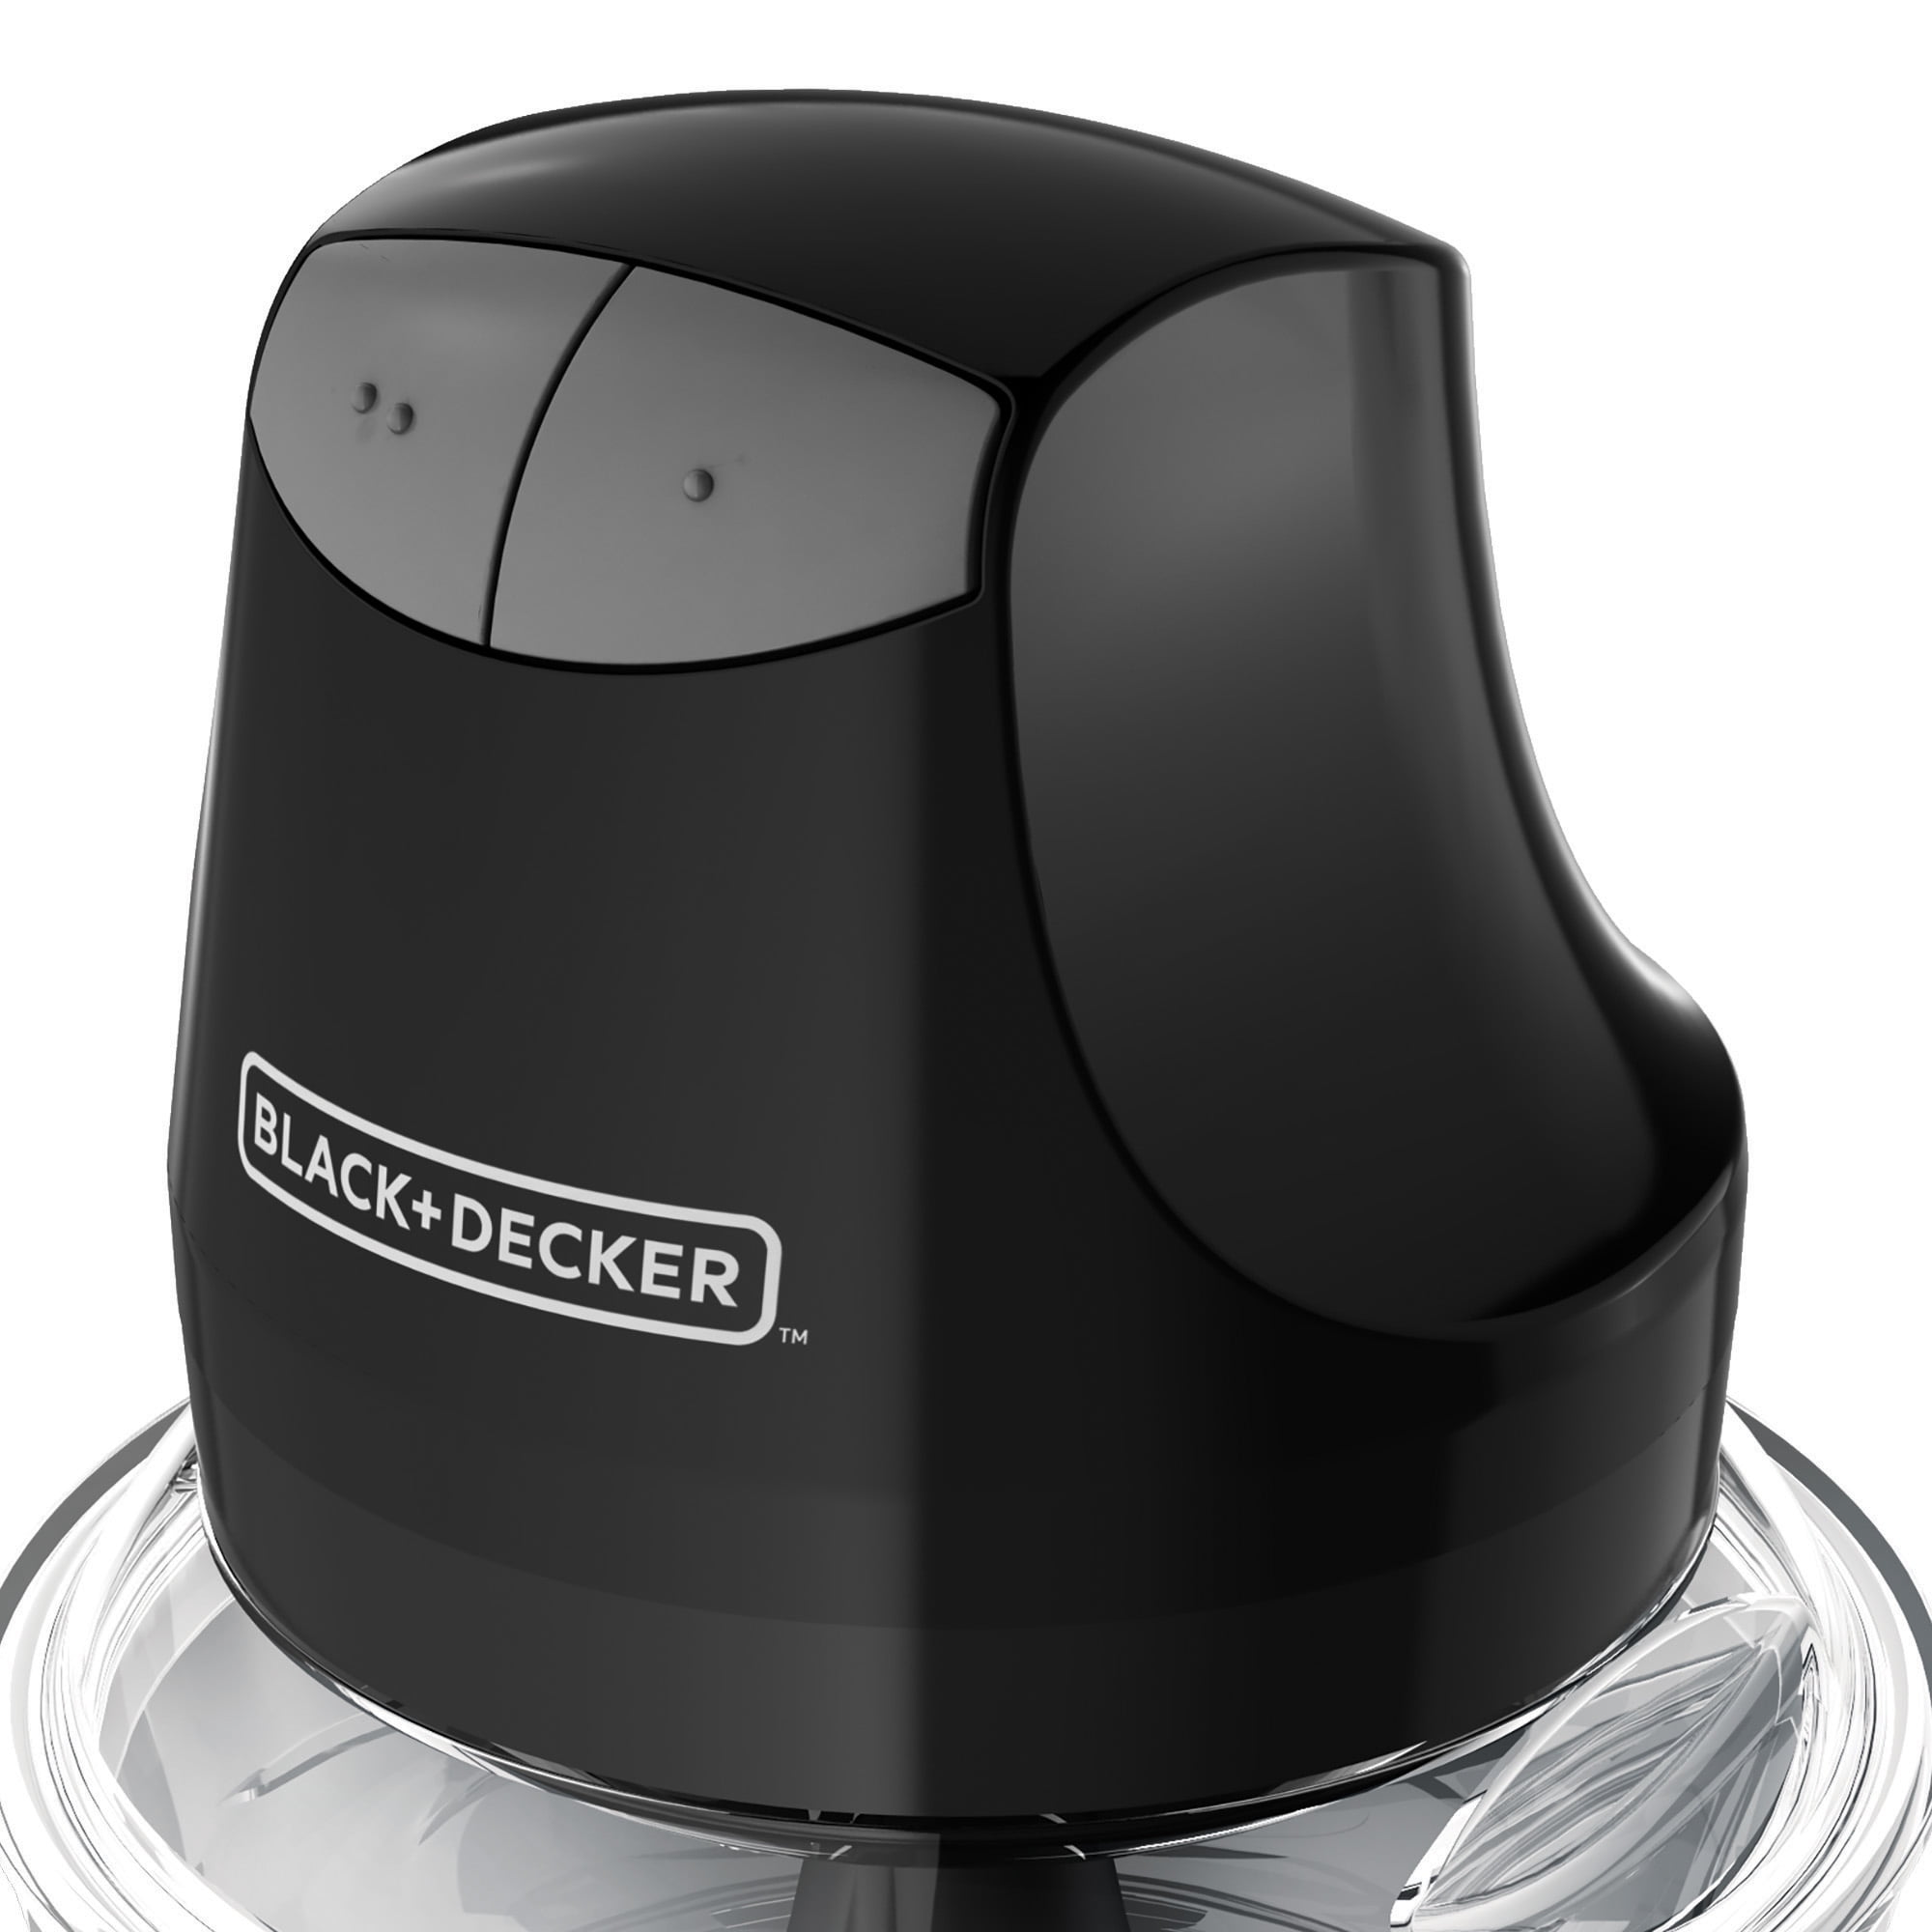 Black + Decker Glass Bowl CHOPPER